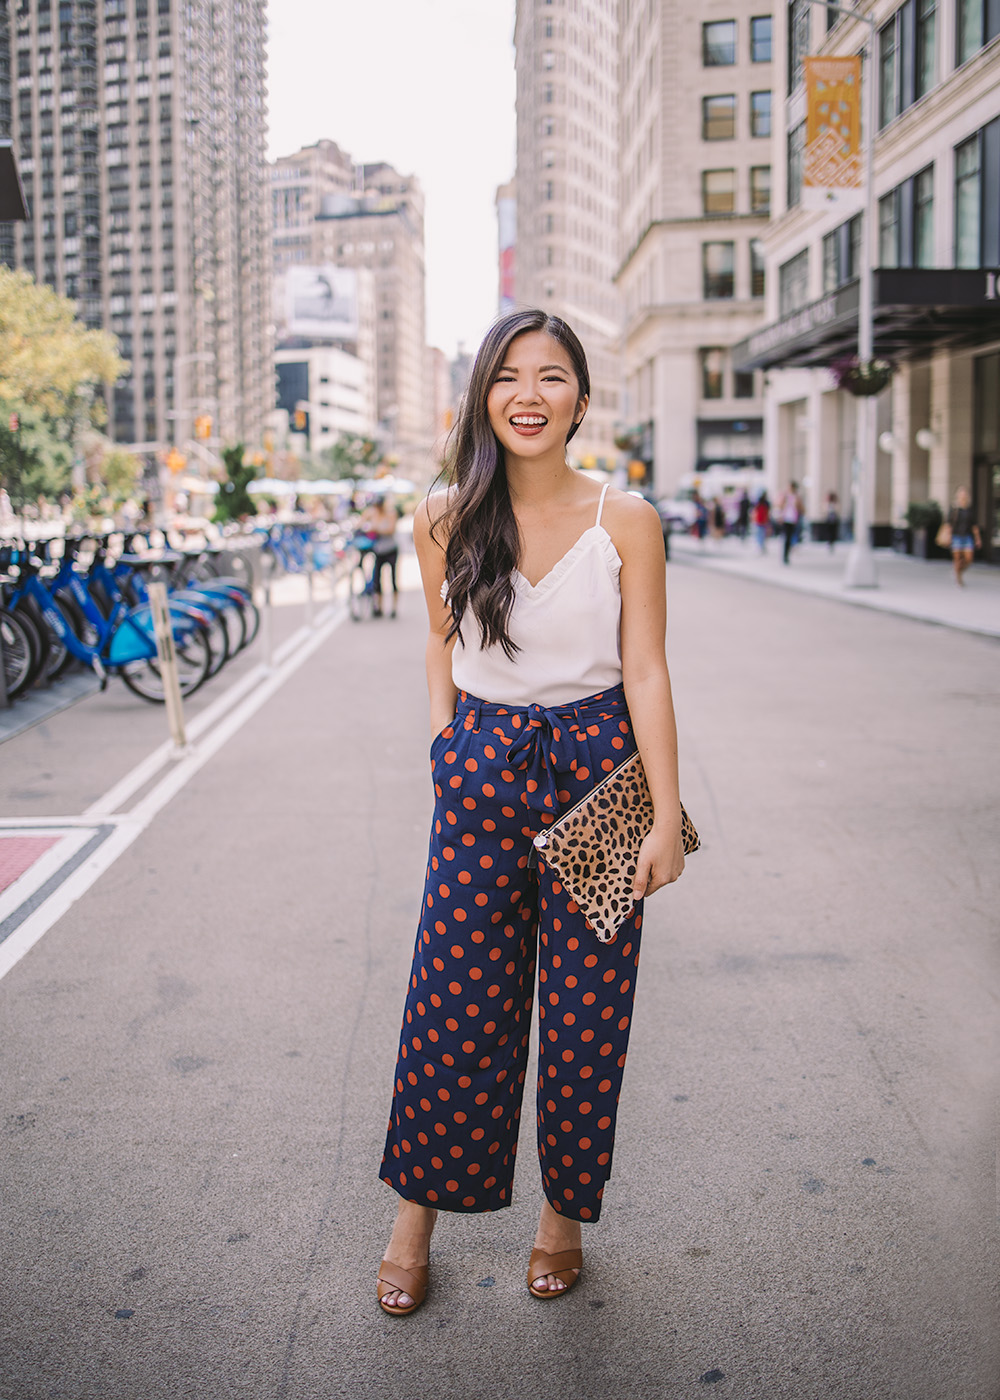 Polka Dot Pants for Summer or Fall – Skirt The Rules